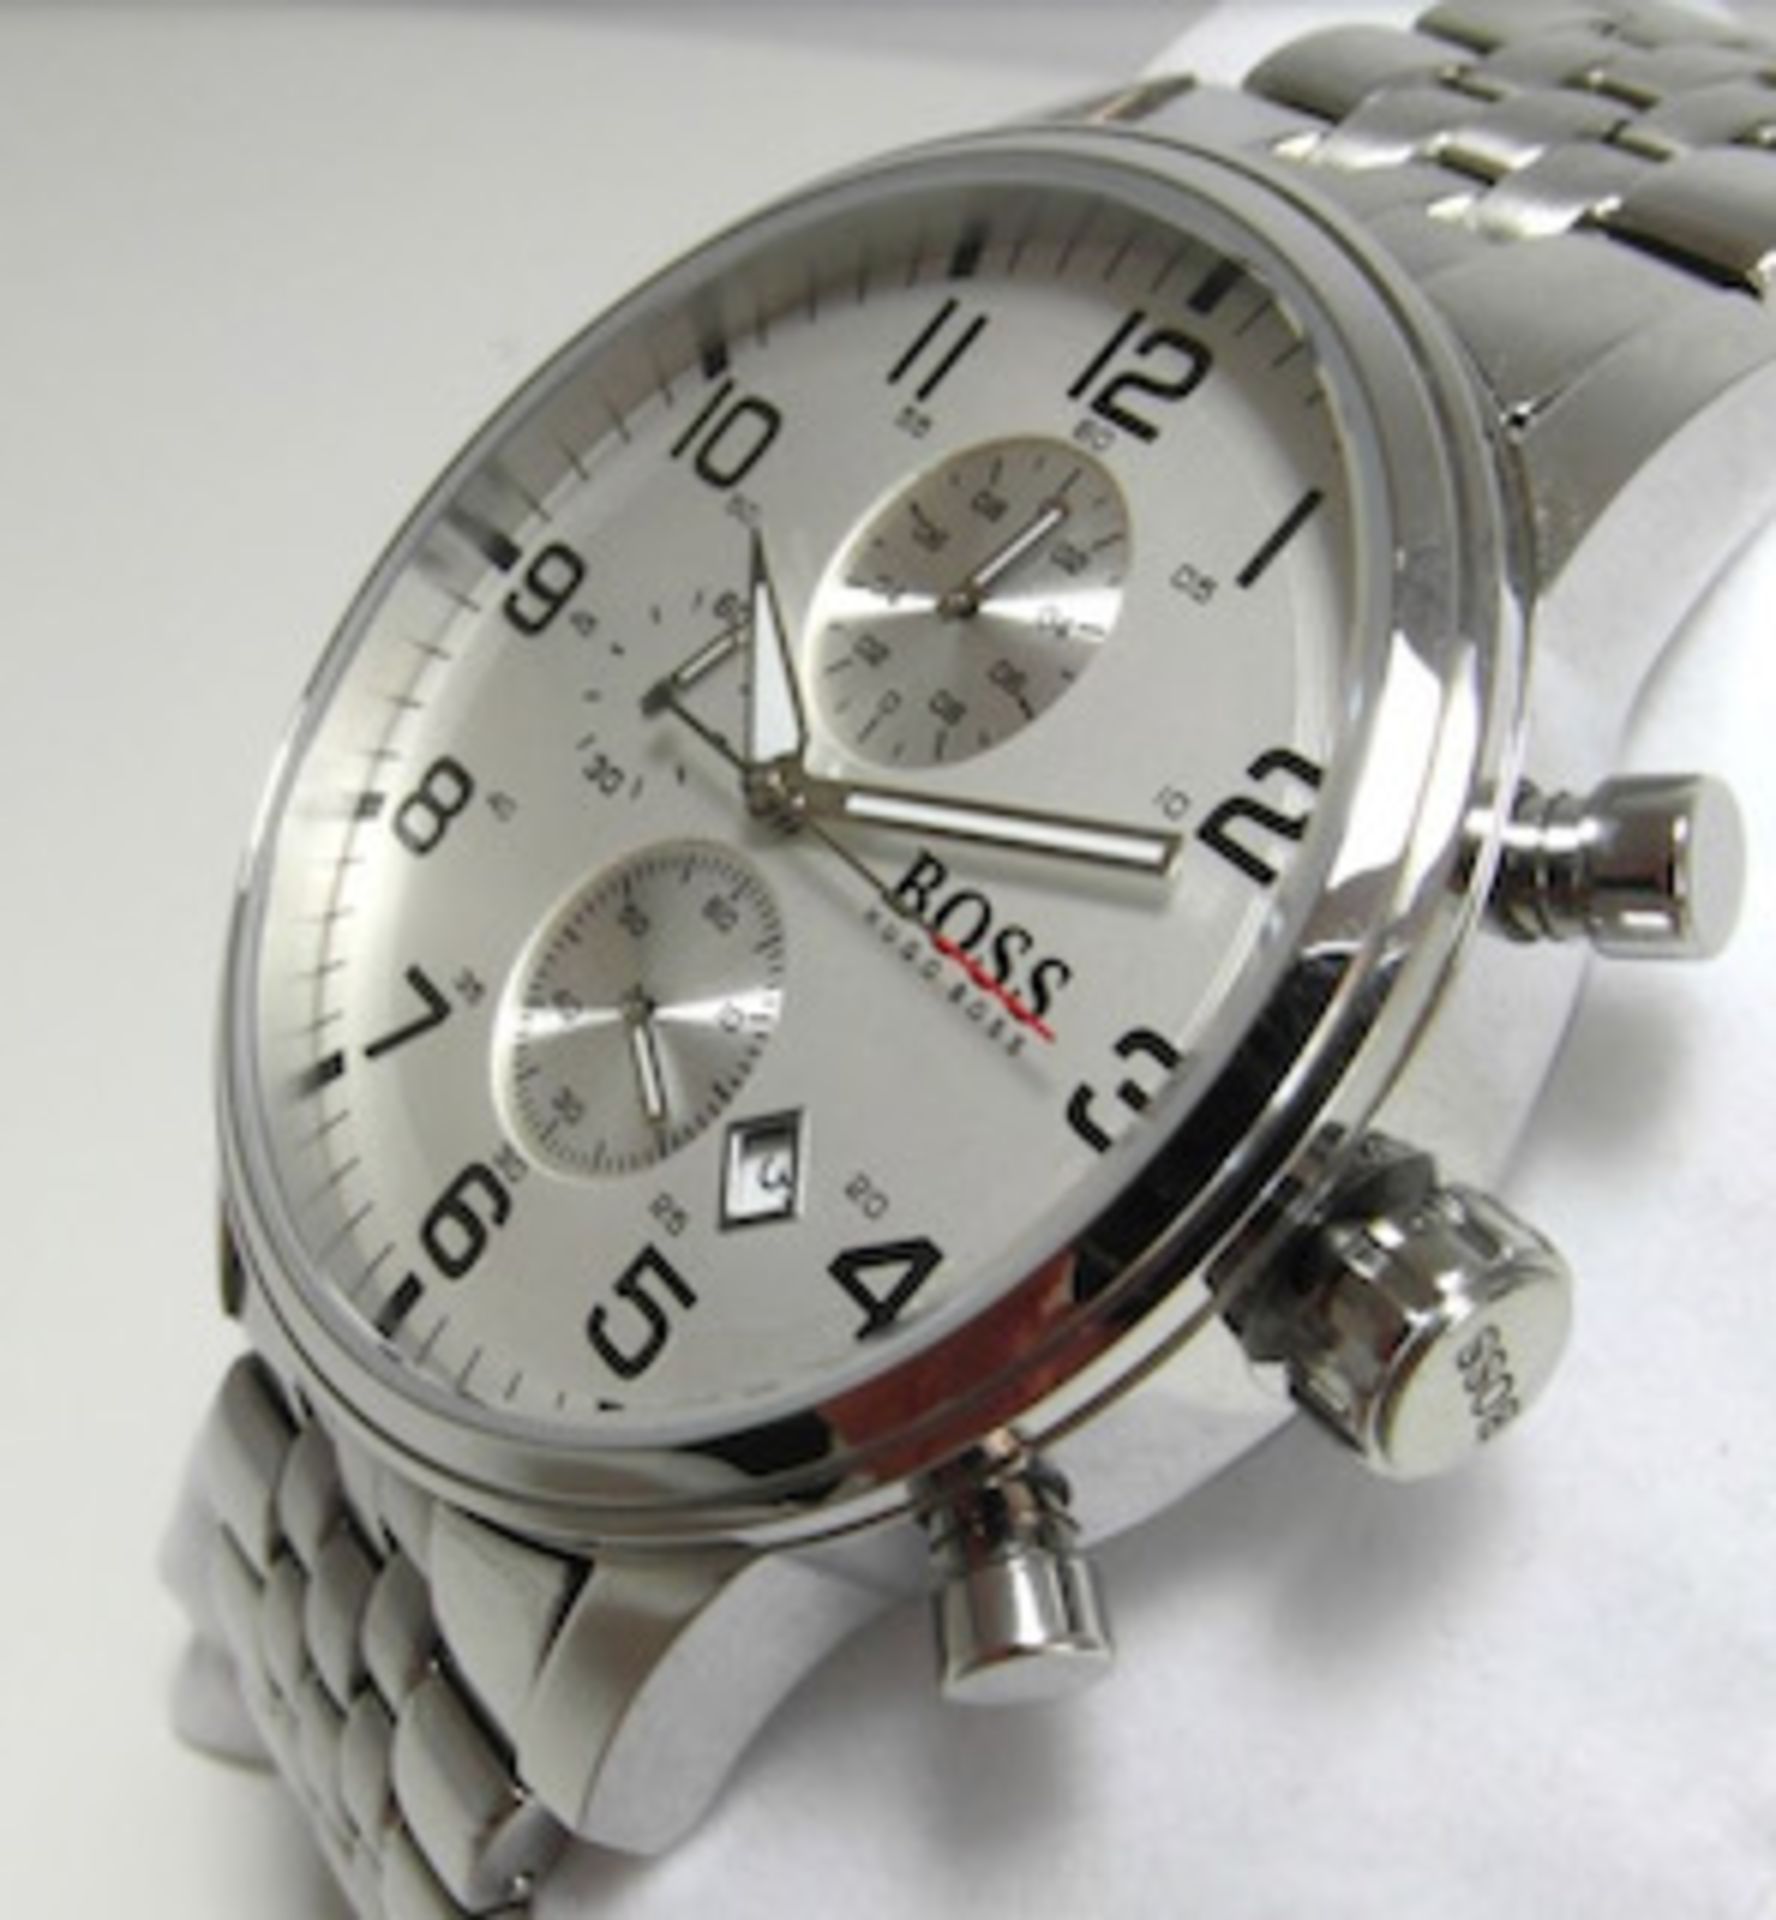 Hugo Boss 1512445 Men's Aeroliner Silver Bracelet Chronograph Watch - Image 4 of 5